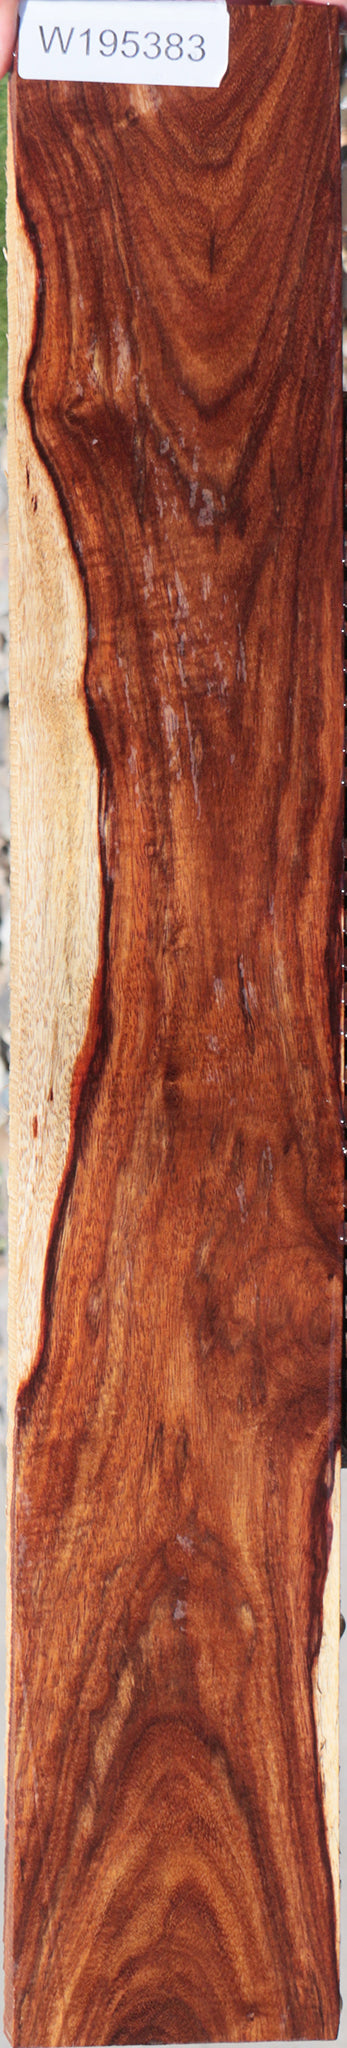 Spalted Granadillo Micro Lumber